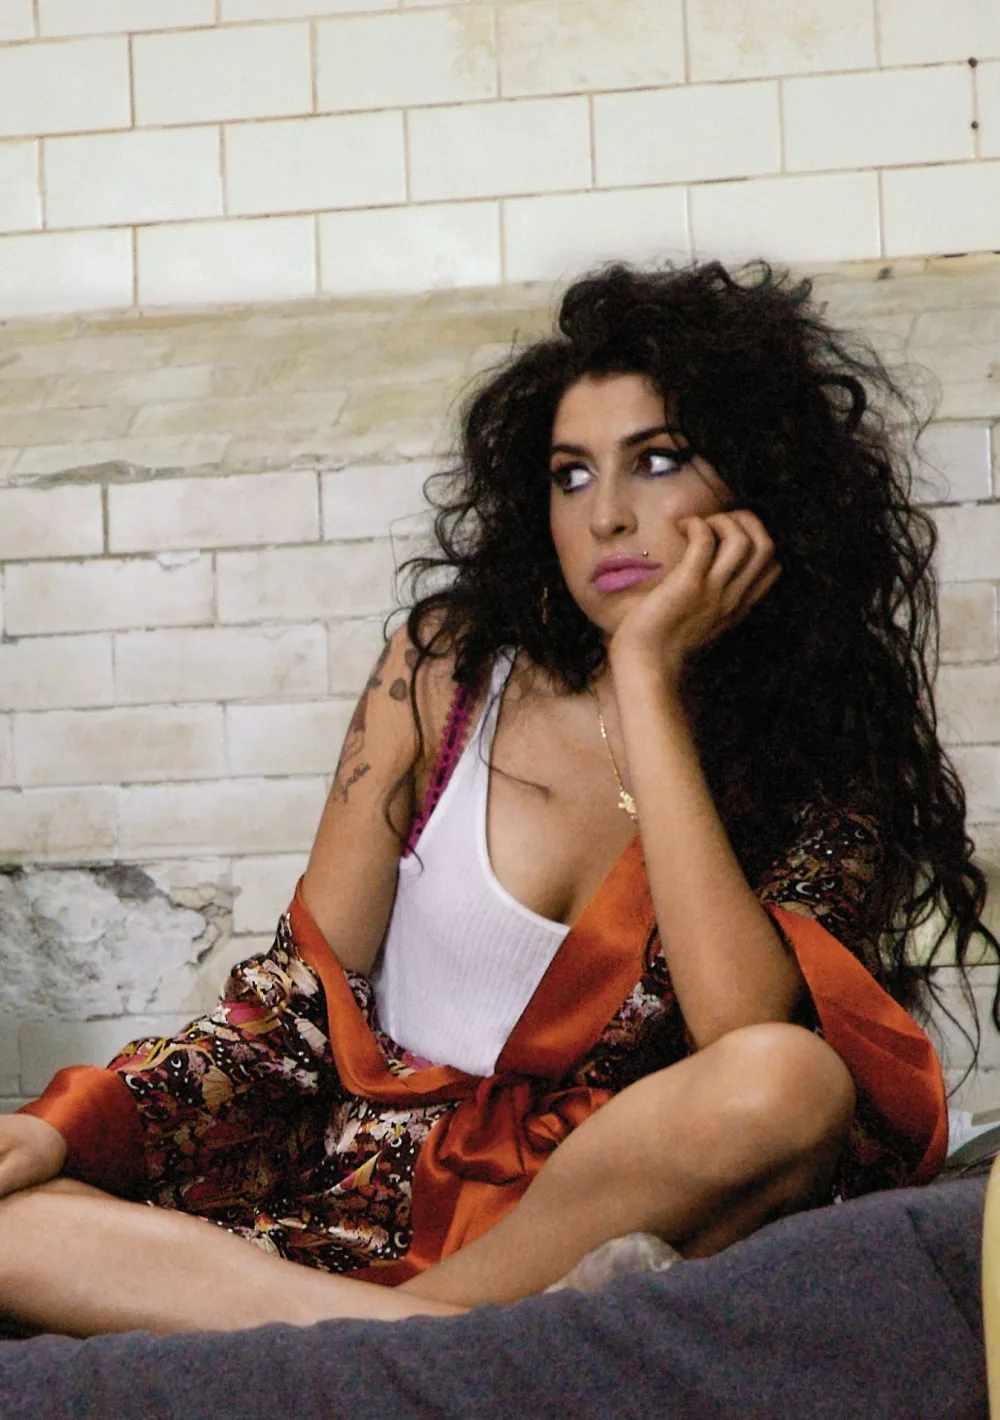 Amy Winehouse starter pladeselskab